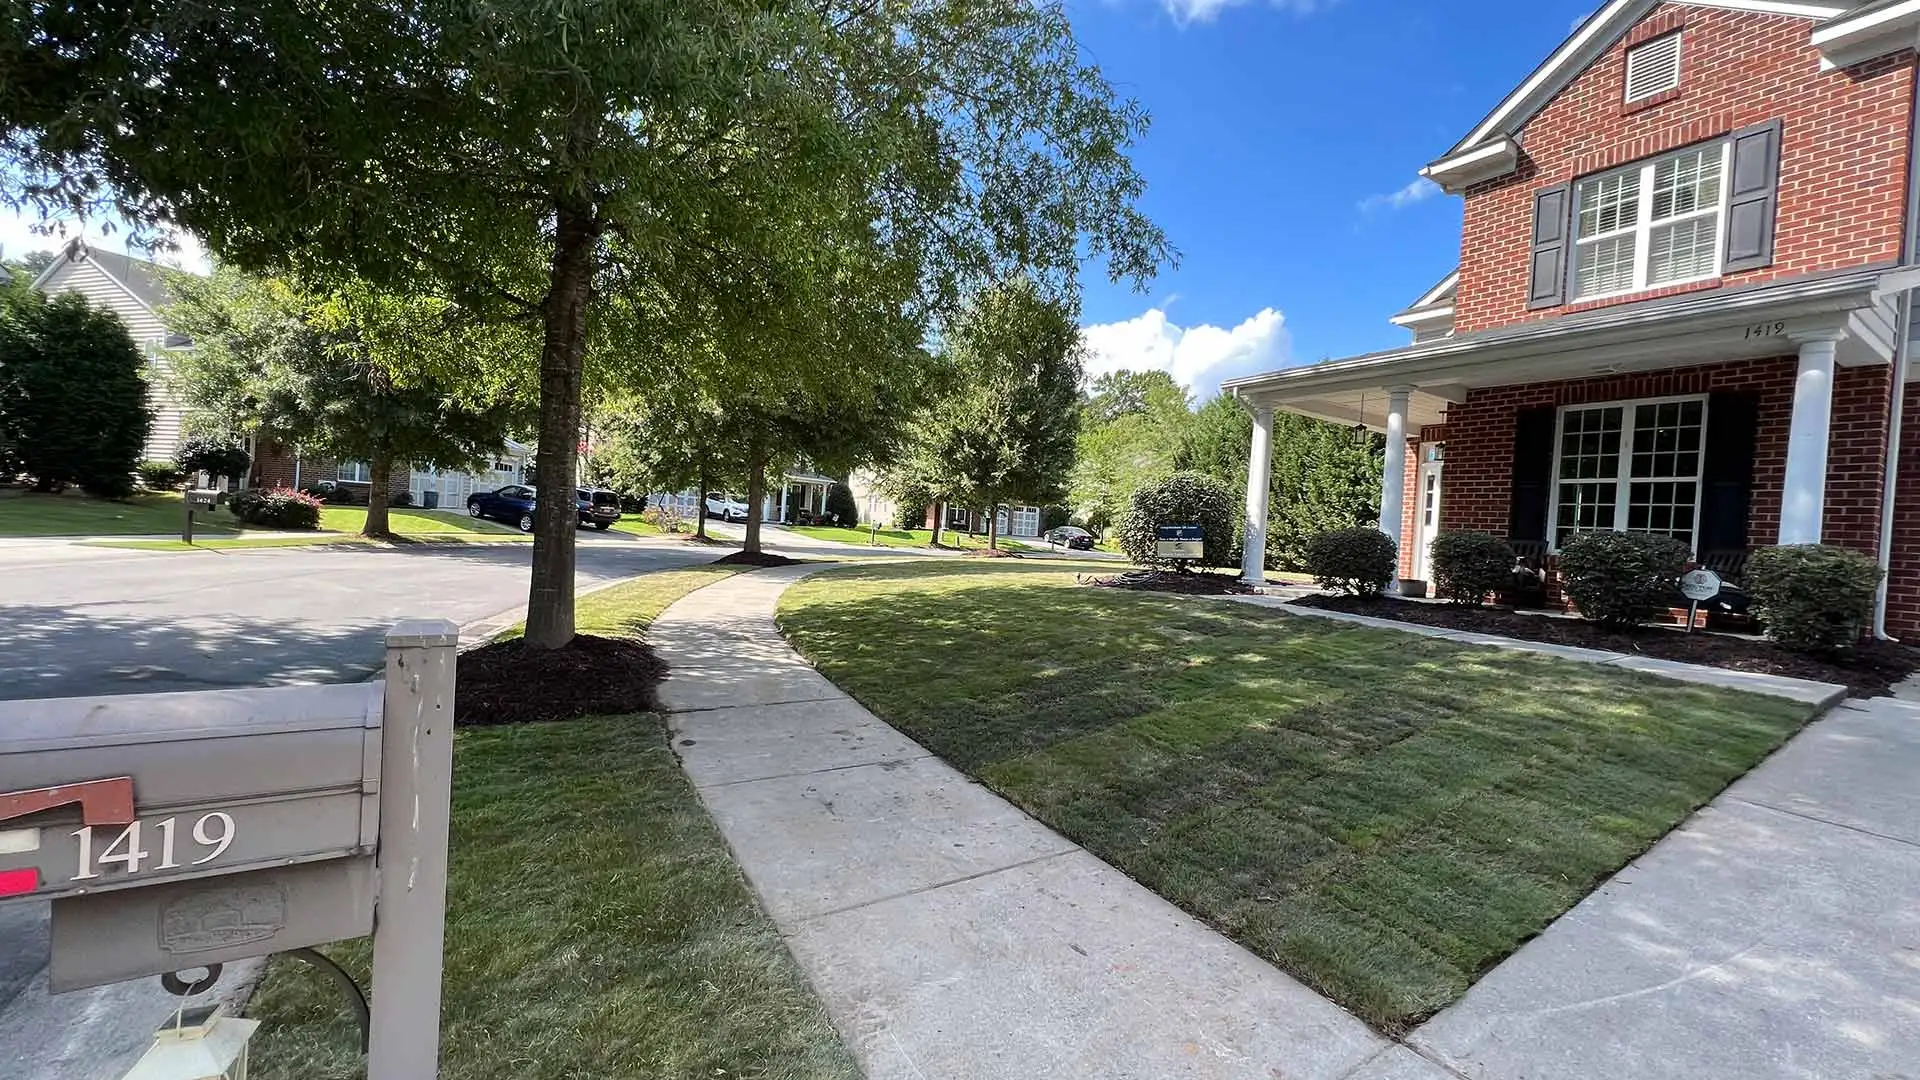 Beautiful new sod lawn for a customer in a neighborhood near Matthews, NC.